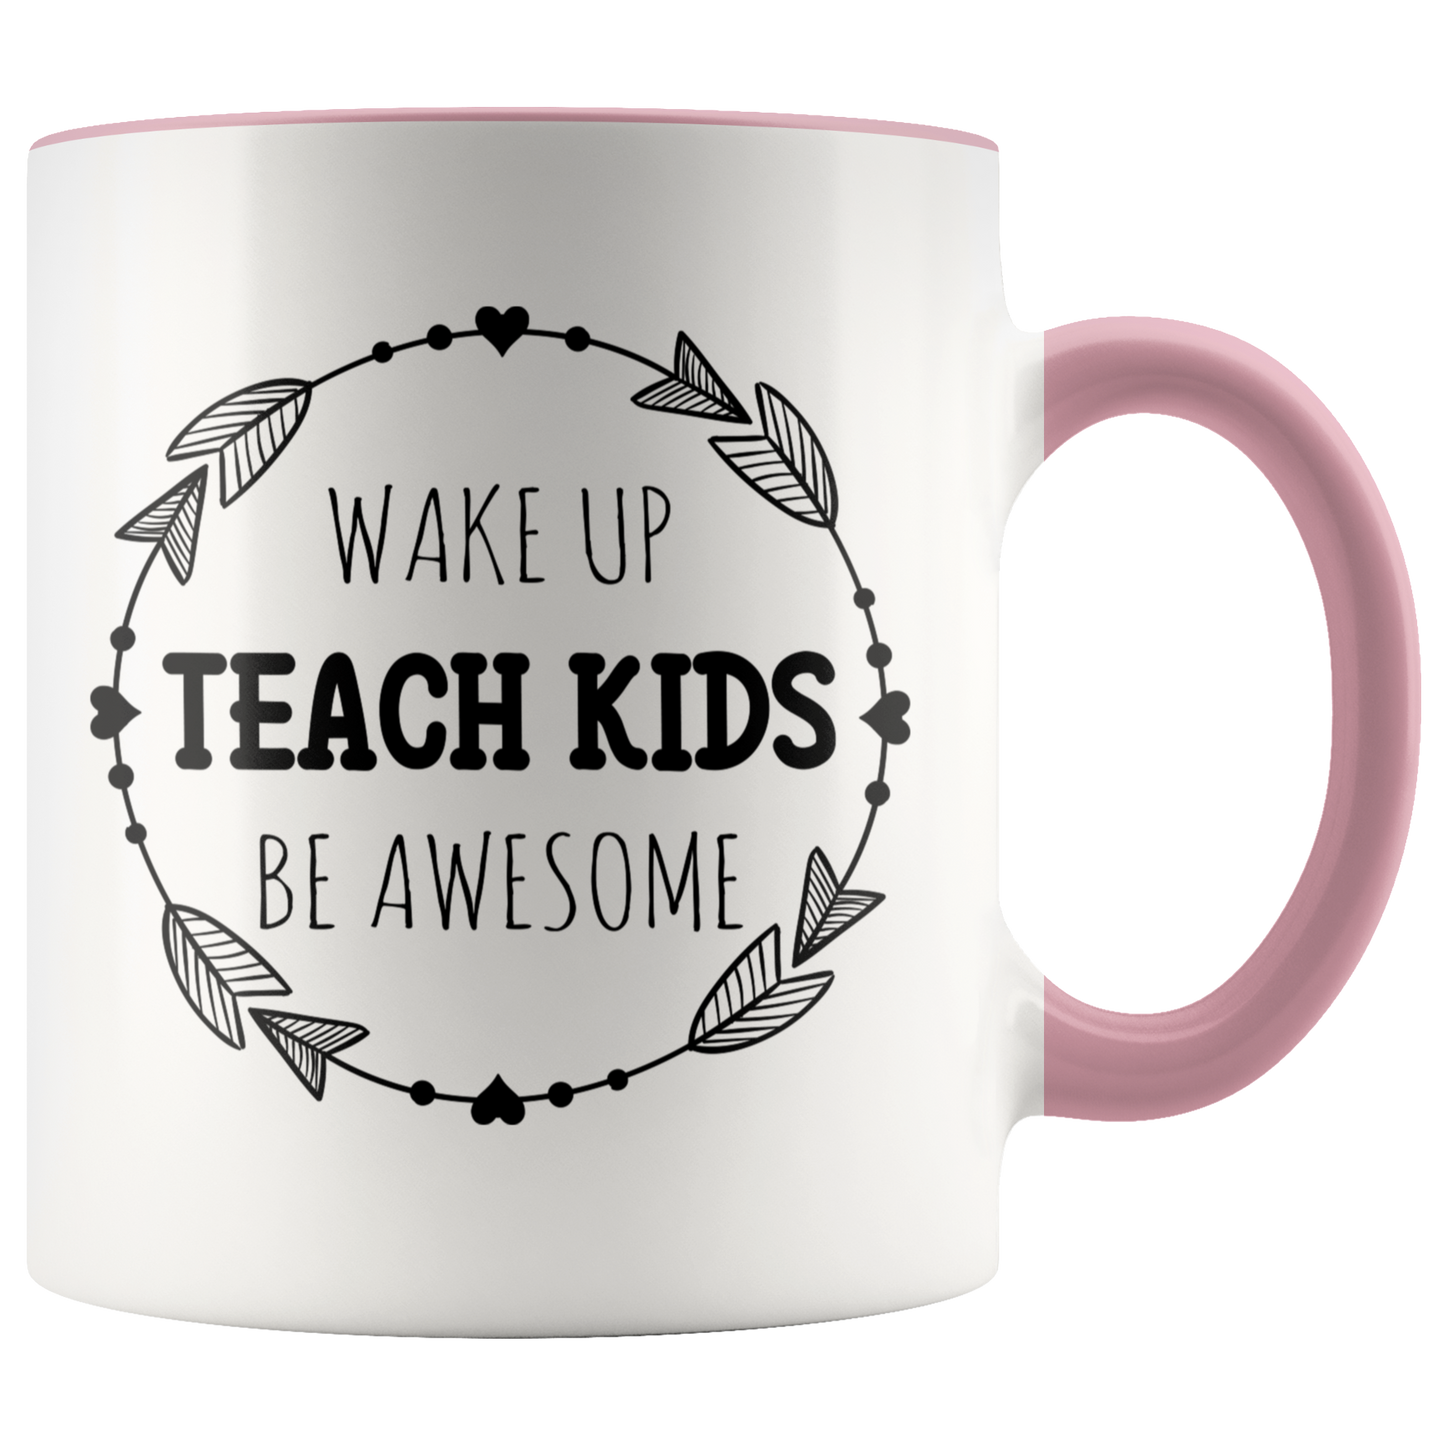 Teacher coffee mug Tea Cup Gift Funny Mug with sayings Ceramic Coffee cup